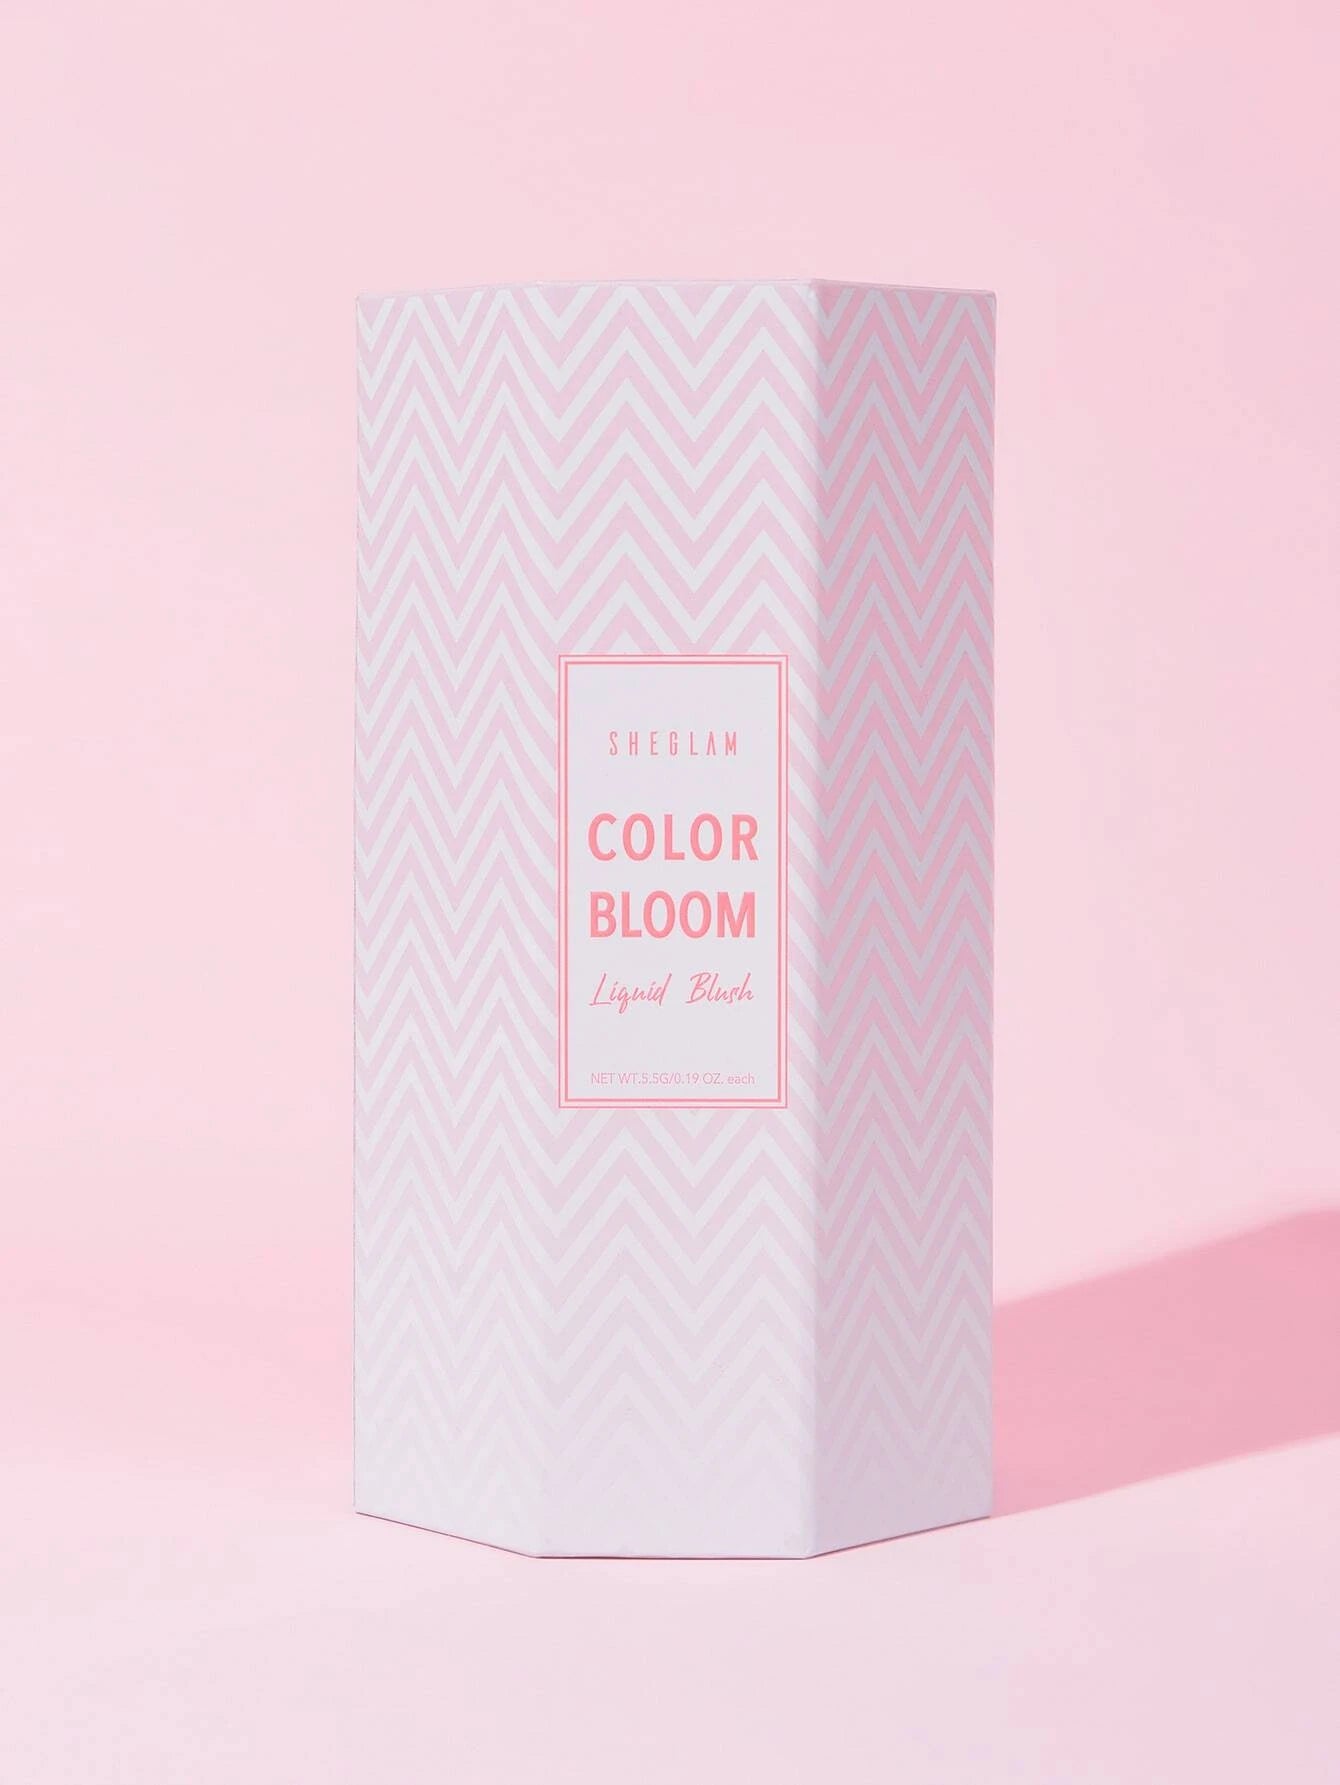 Sheglam Color Bloom Vault (Limited Edition)